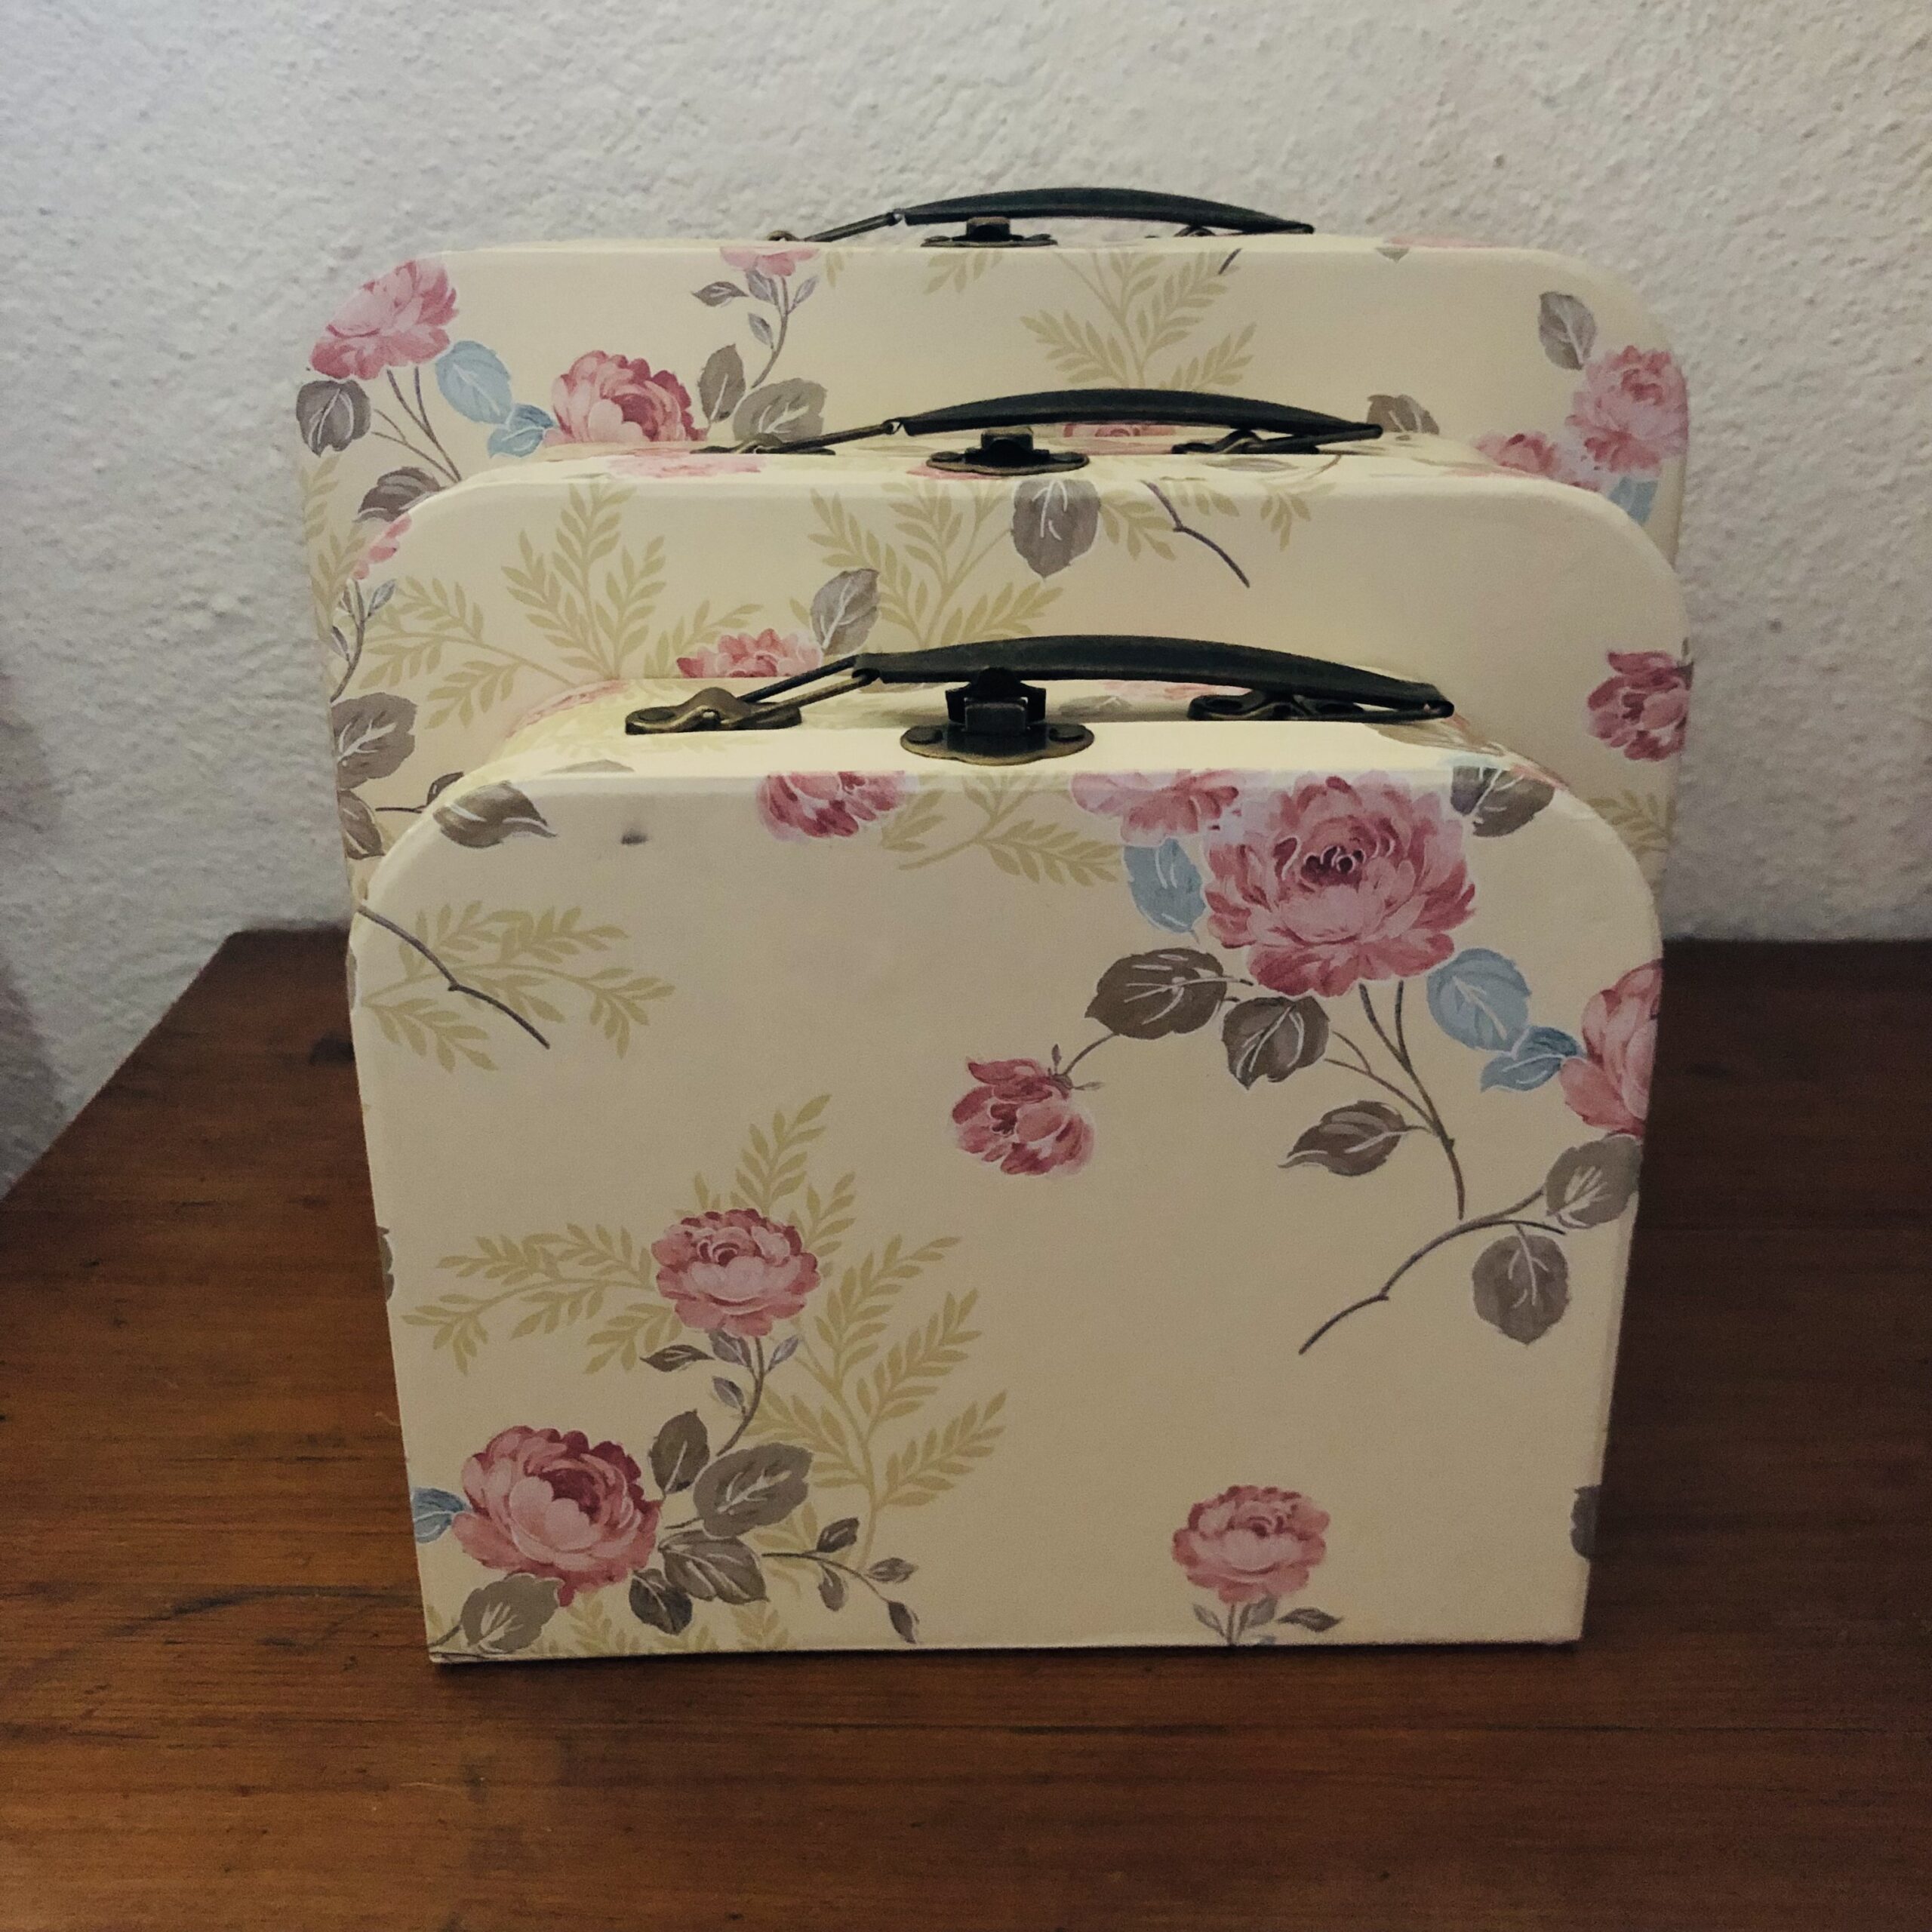 Scatola valigia piccola in cartone ,floreale beige